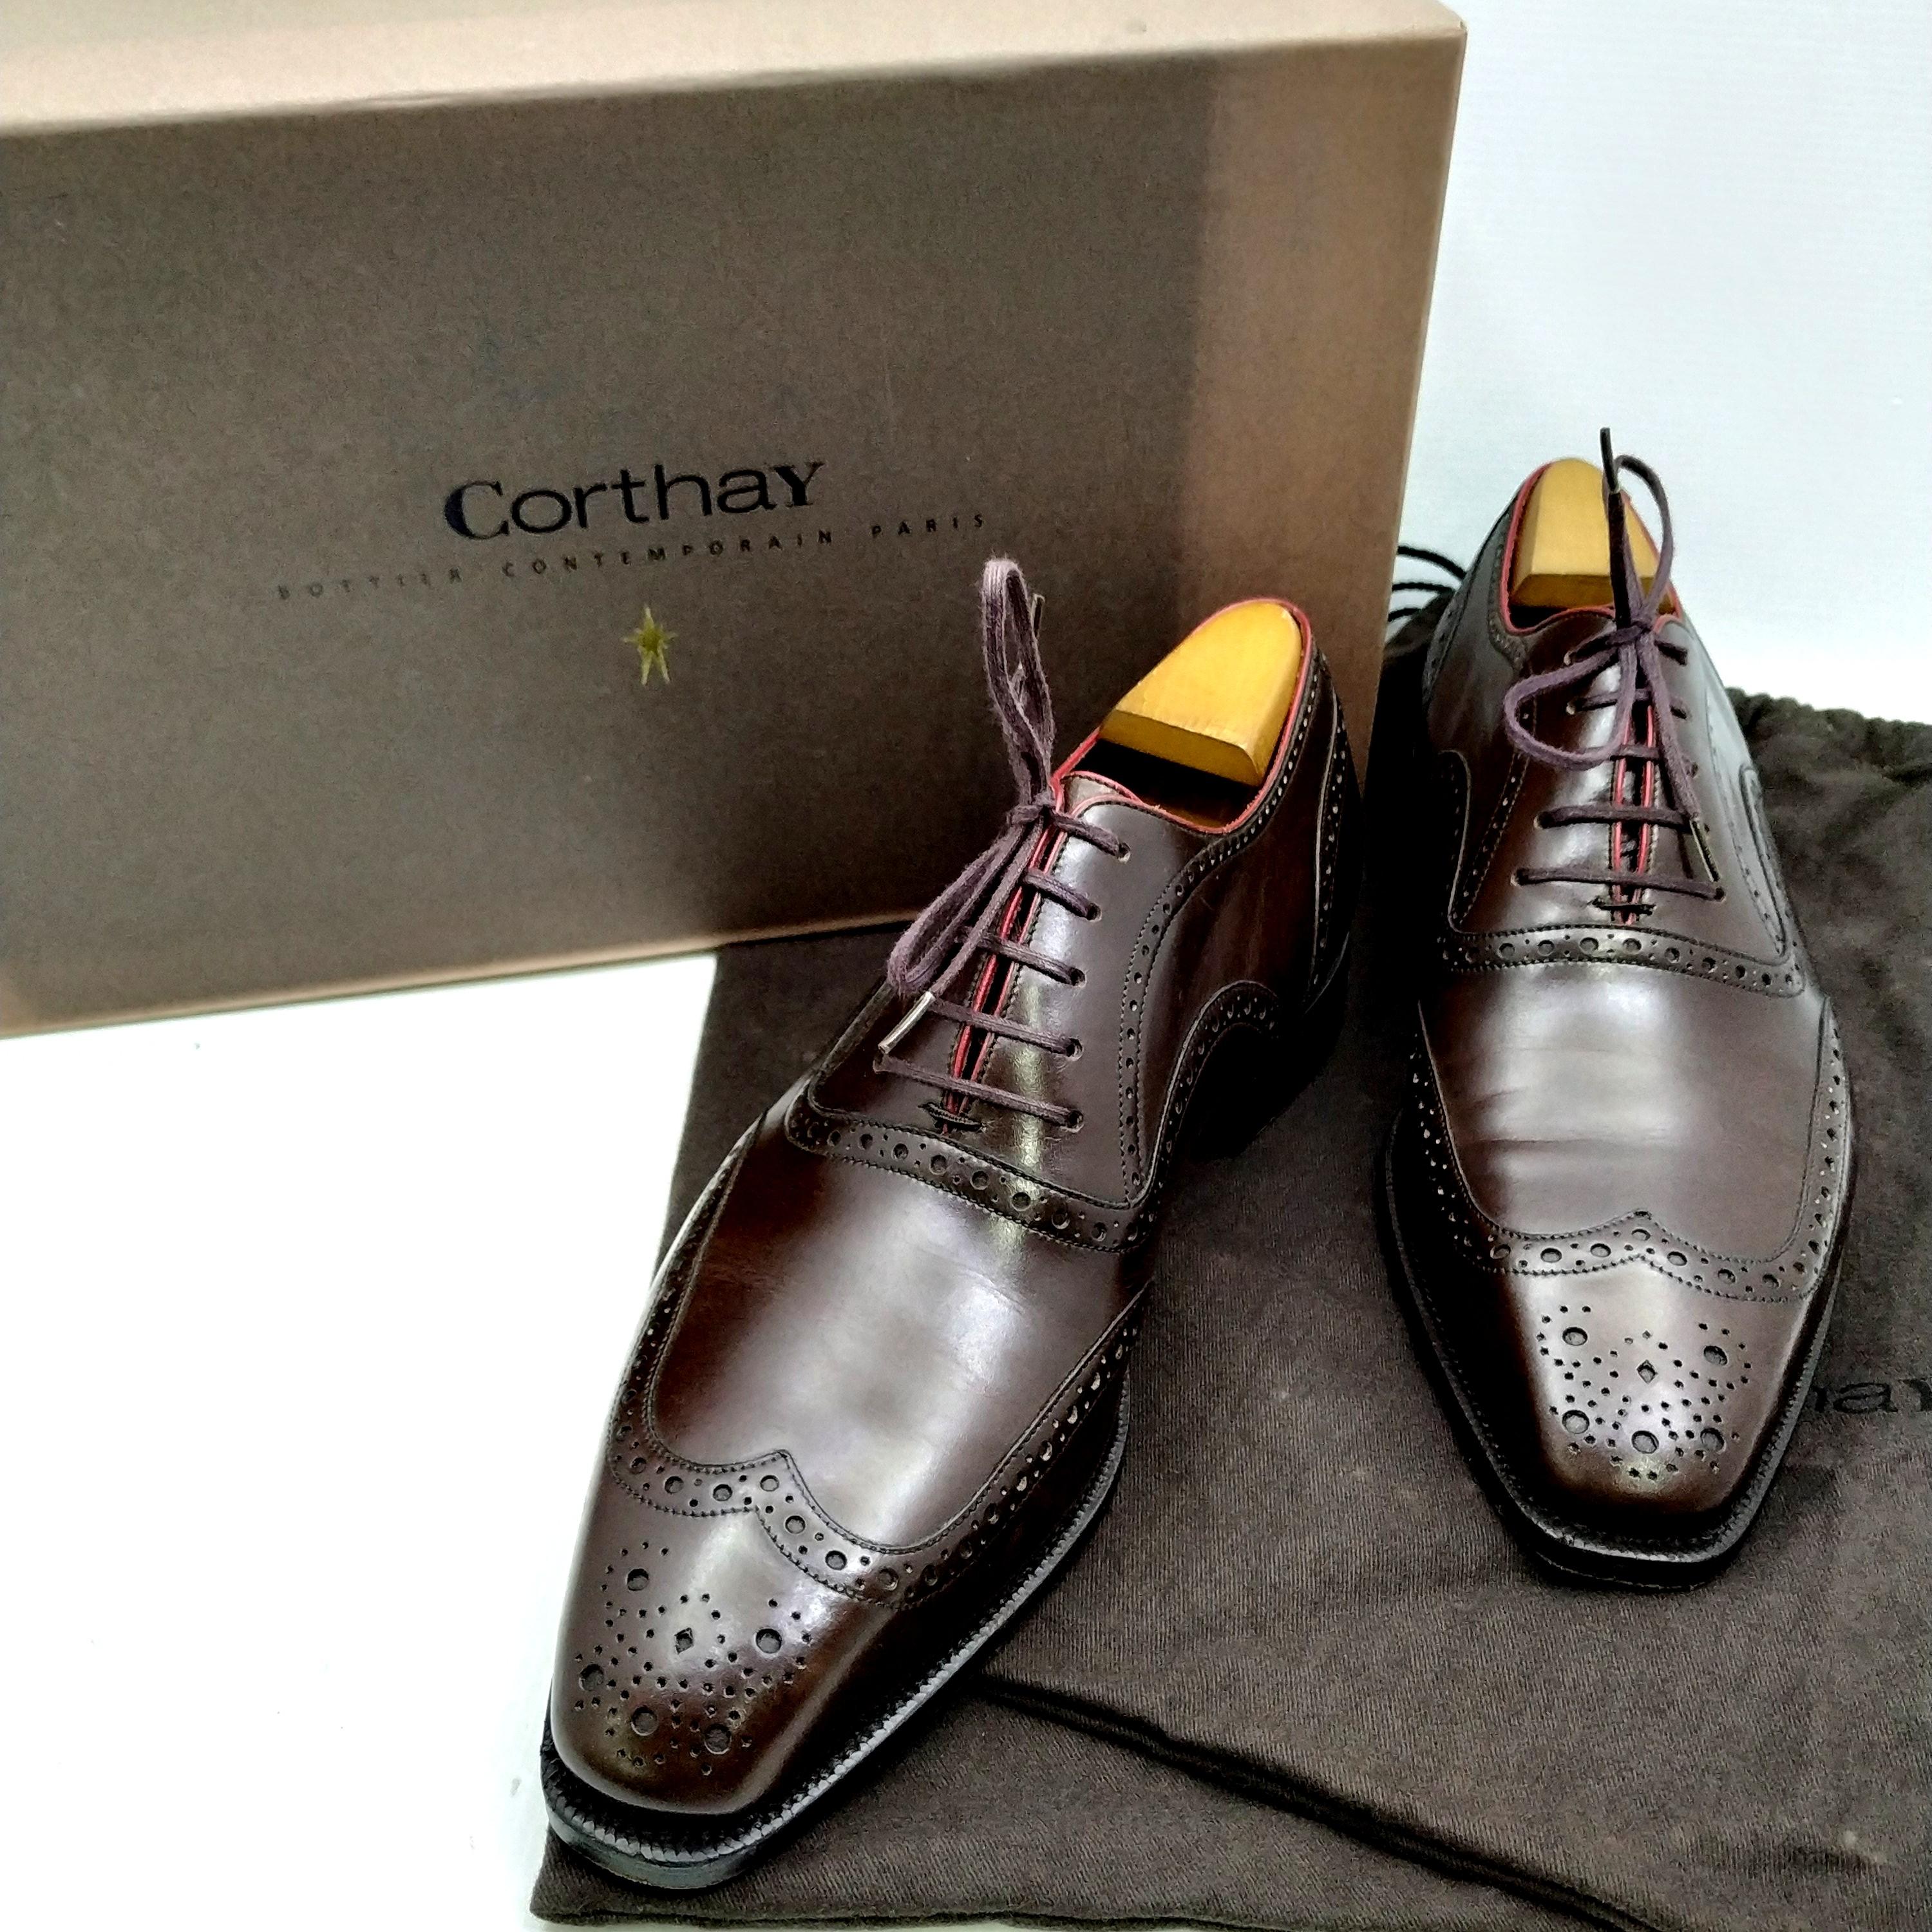 corthay shoes price